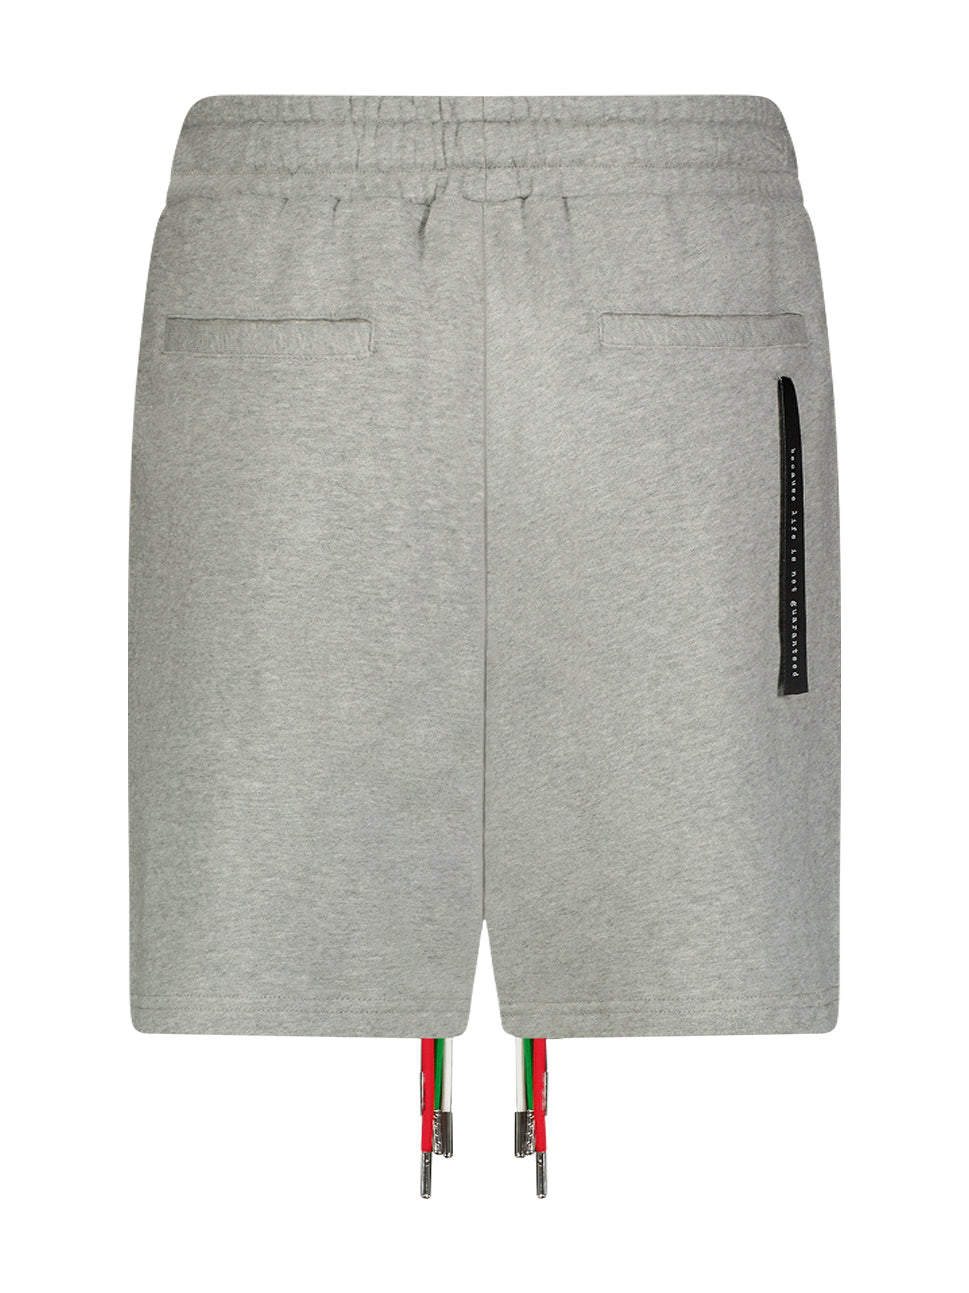 bling x byd knit shorts heather grey